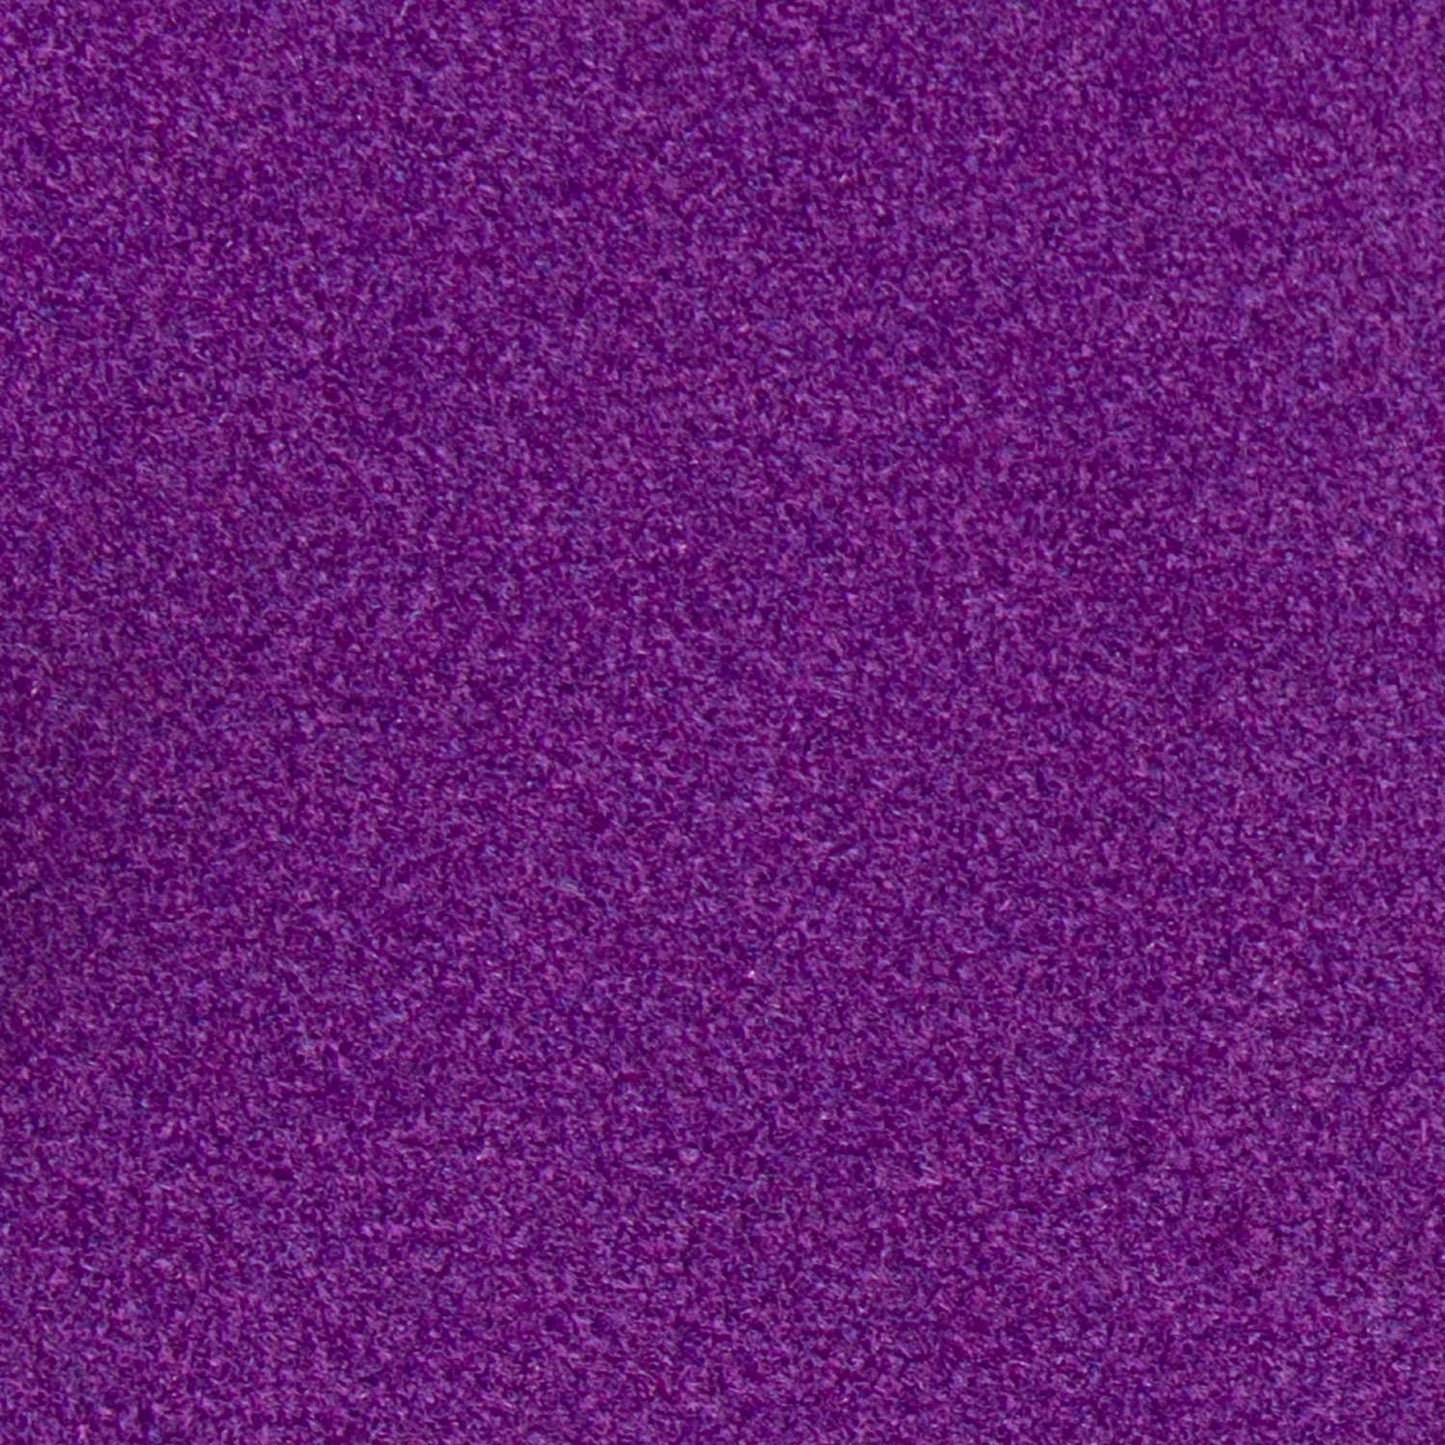 Siser Stripflock S0015 Purple